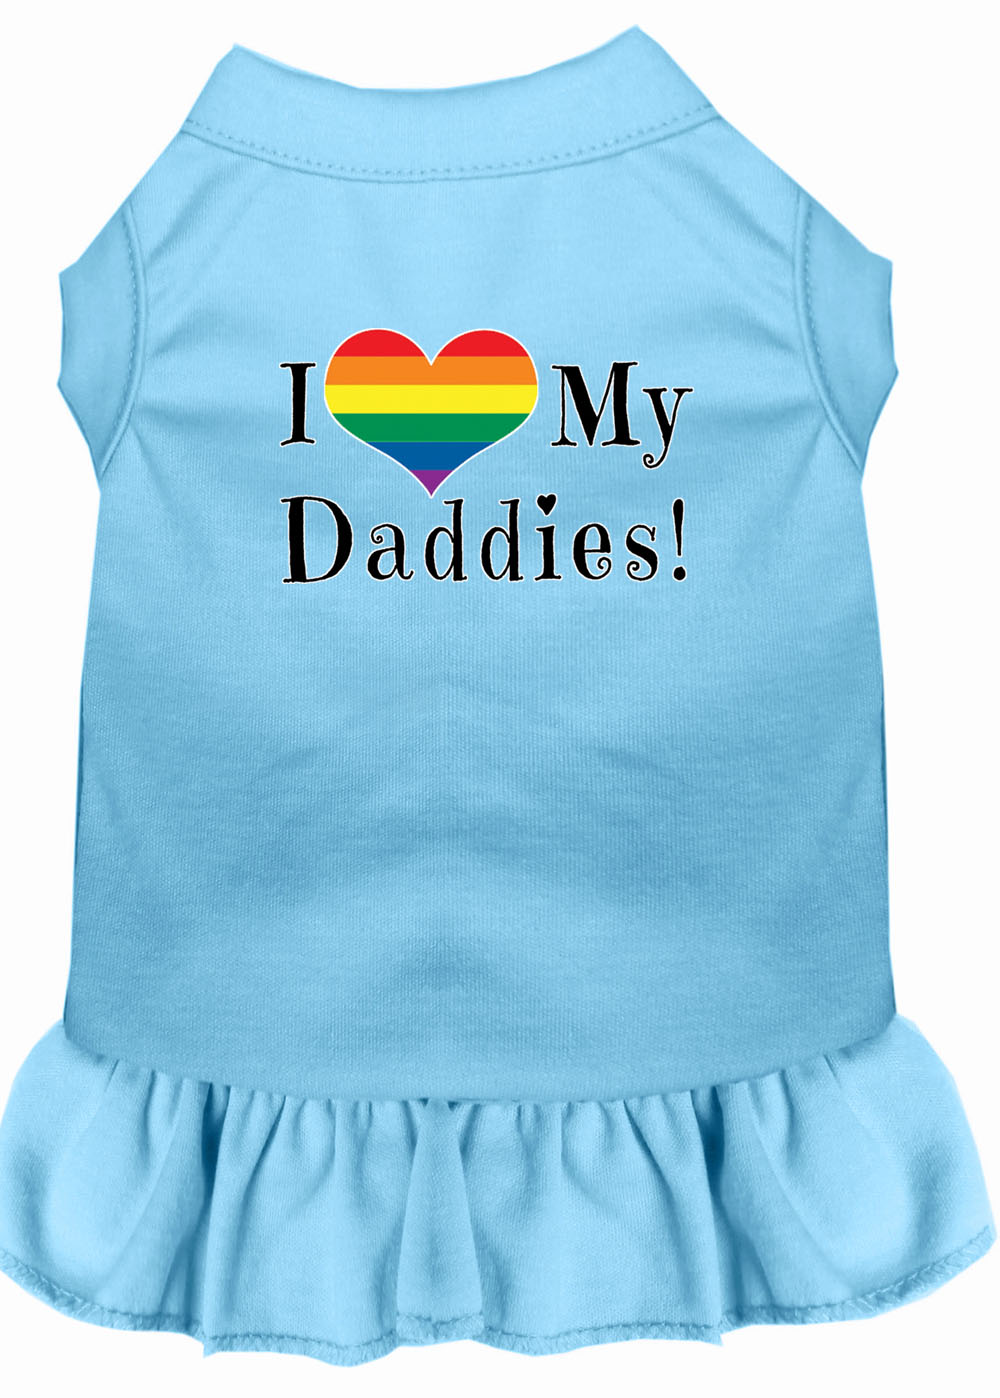 I Heart my Daddies Screen Print Dog Dress Baby Blue Lg